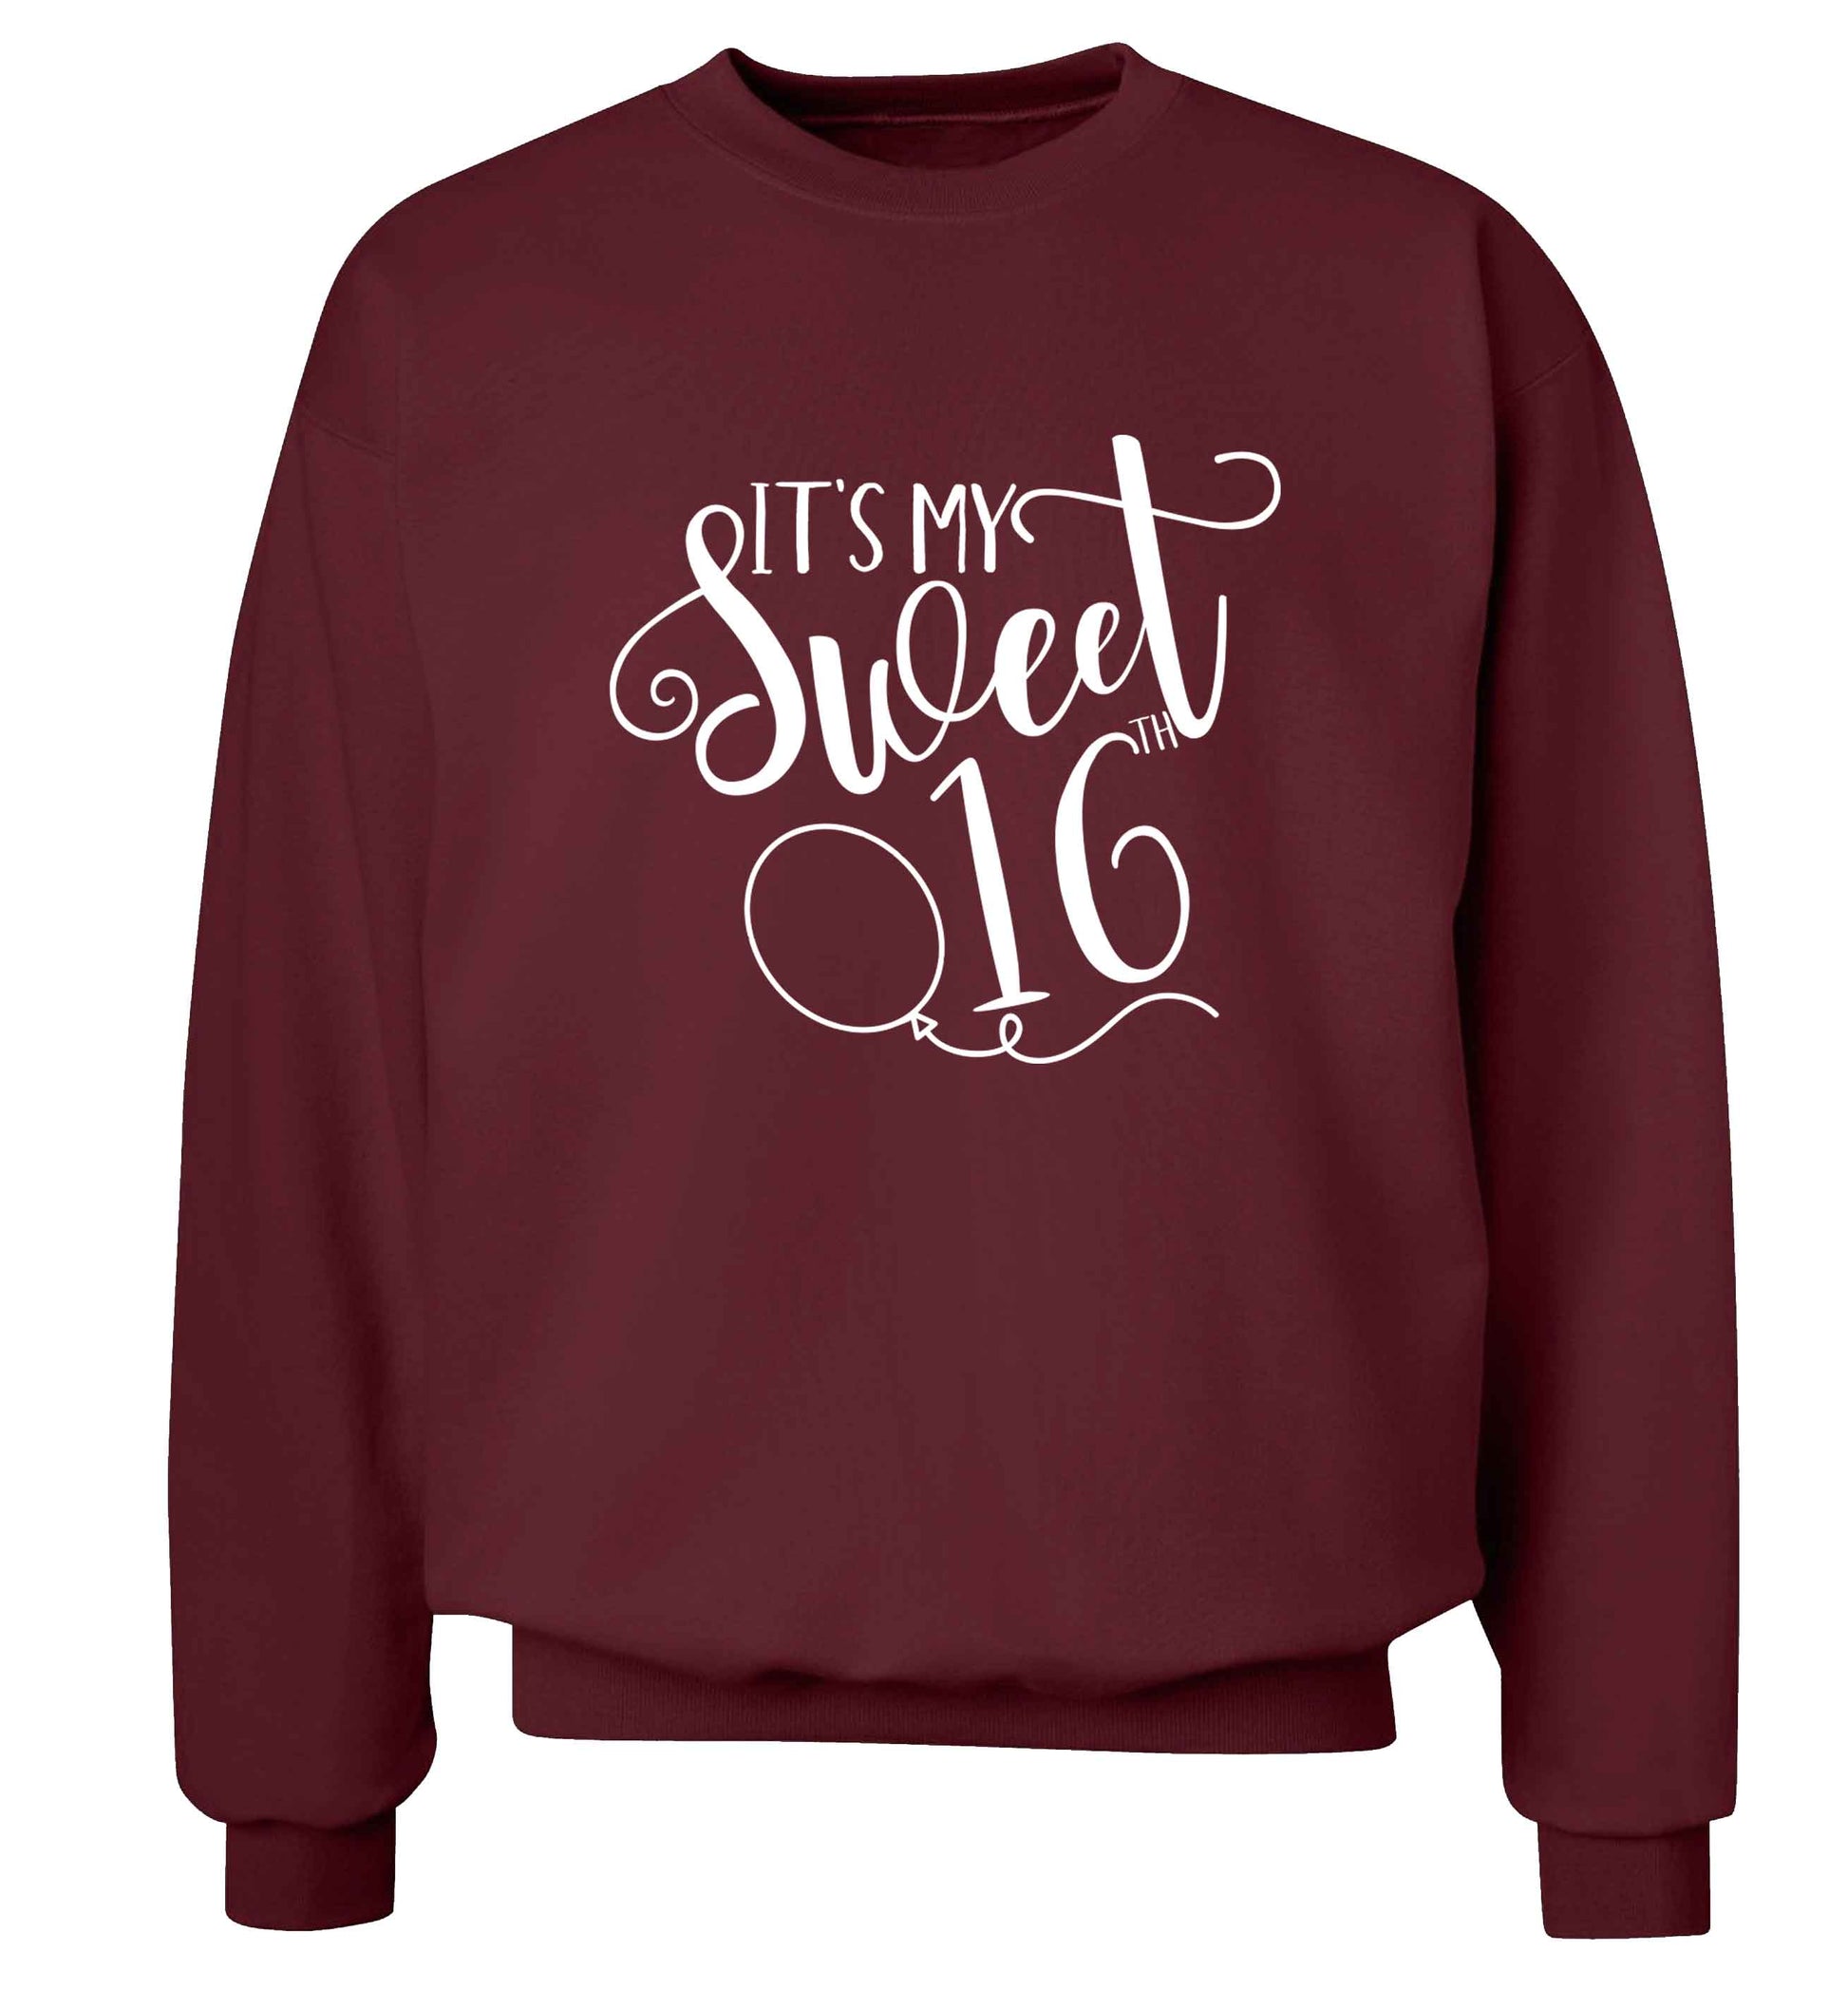 It's my sweet 16thadult's unisex maroon sweater 2XL